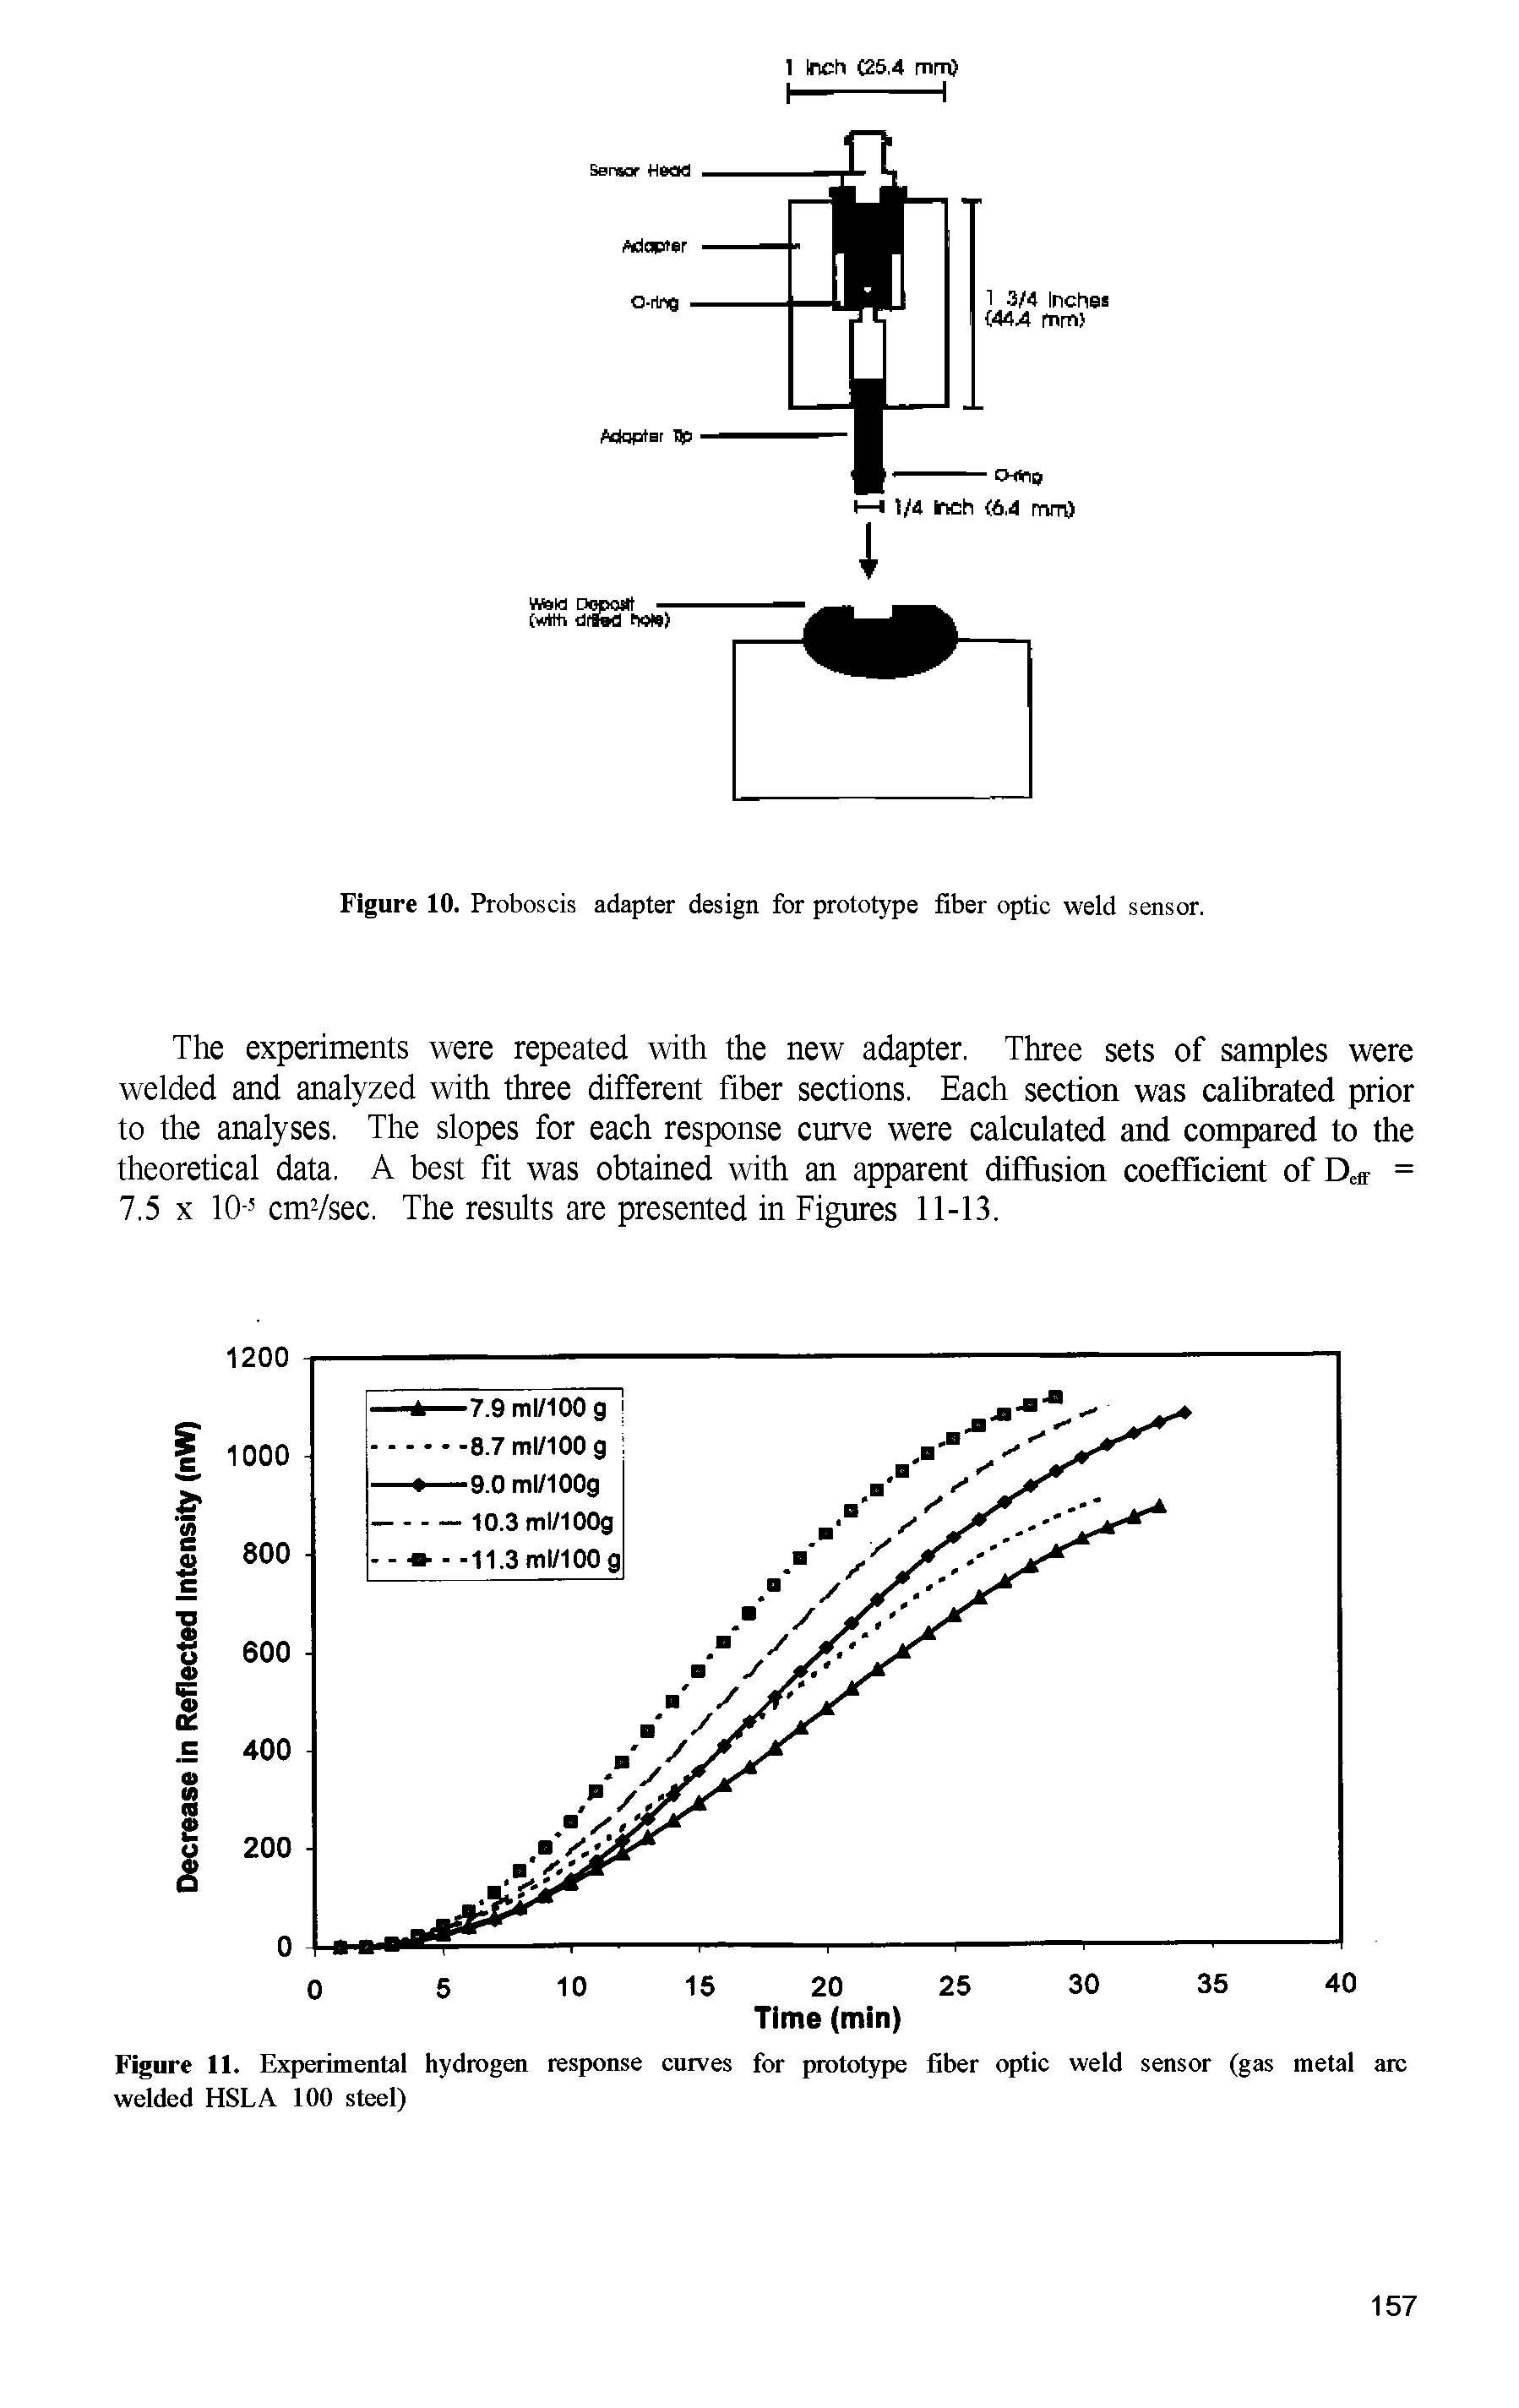 Figure 11. Experimental hydrogen response curves for prototype fiber optic weld sensor (gas metal arc welded HSLA 100 steel)...